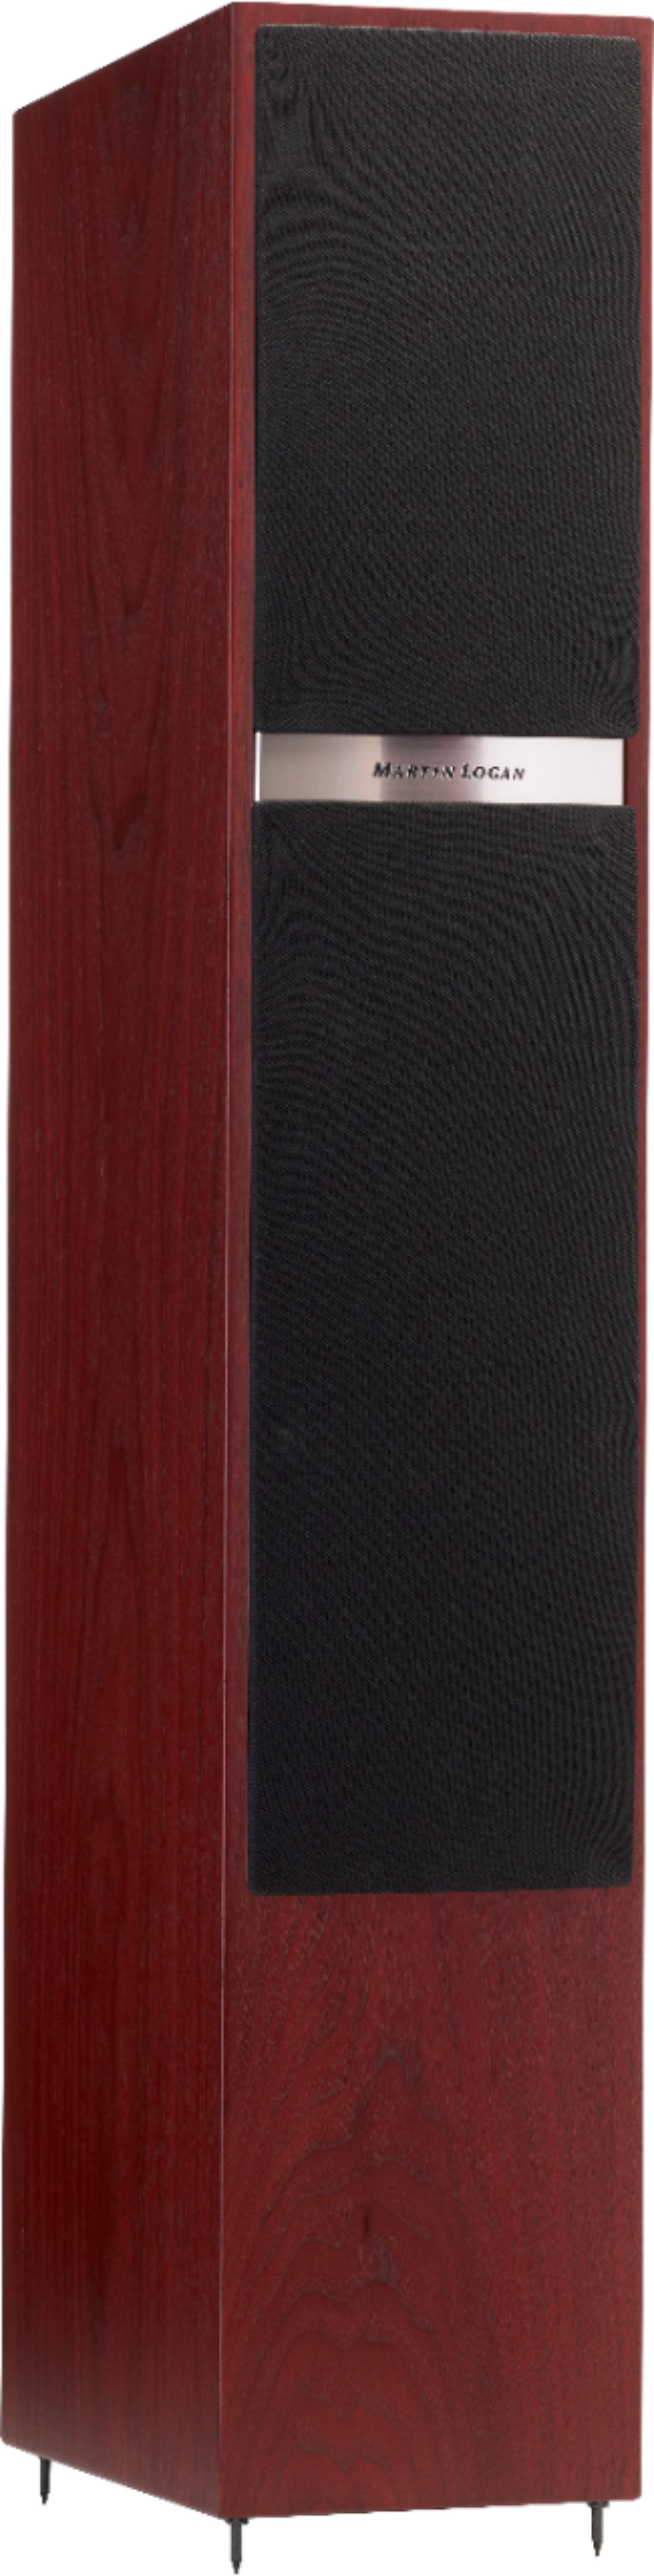 Angle View: MartinLogan - Motion Dual 6-1/2" Passive 2.5-Way Floor Speaker (Each) - Red Walnut